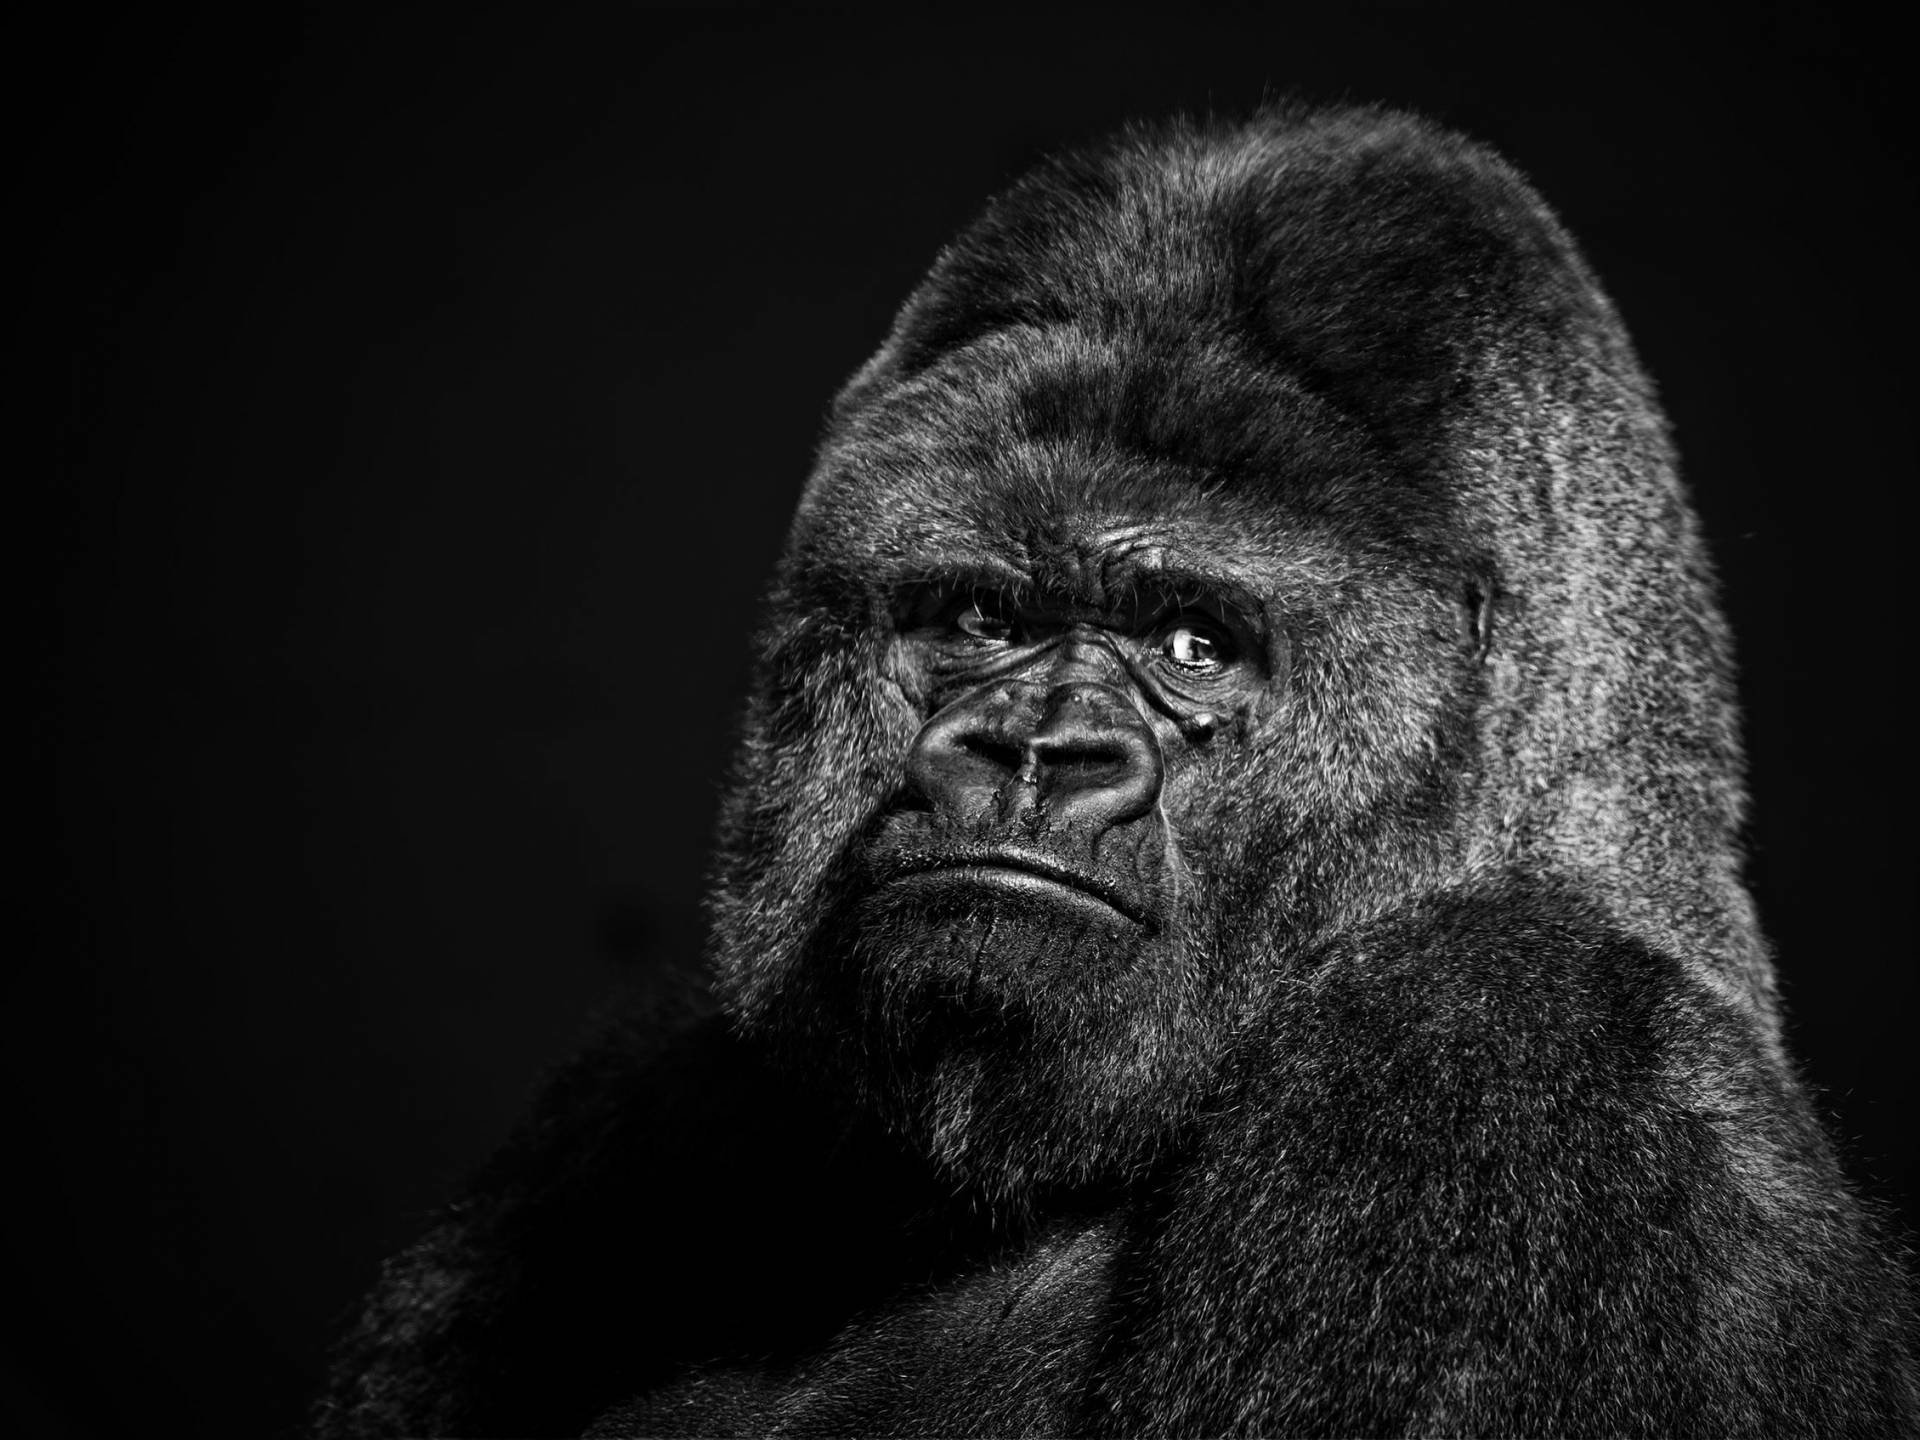 Monochromatic Photograph Of A Gorilla Background